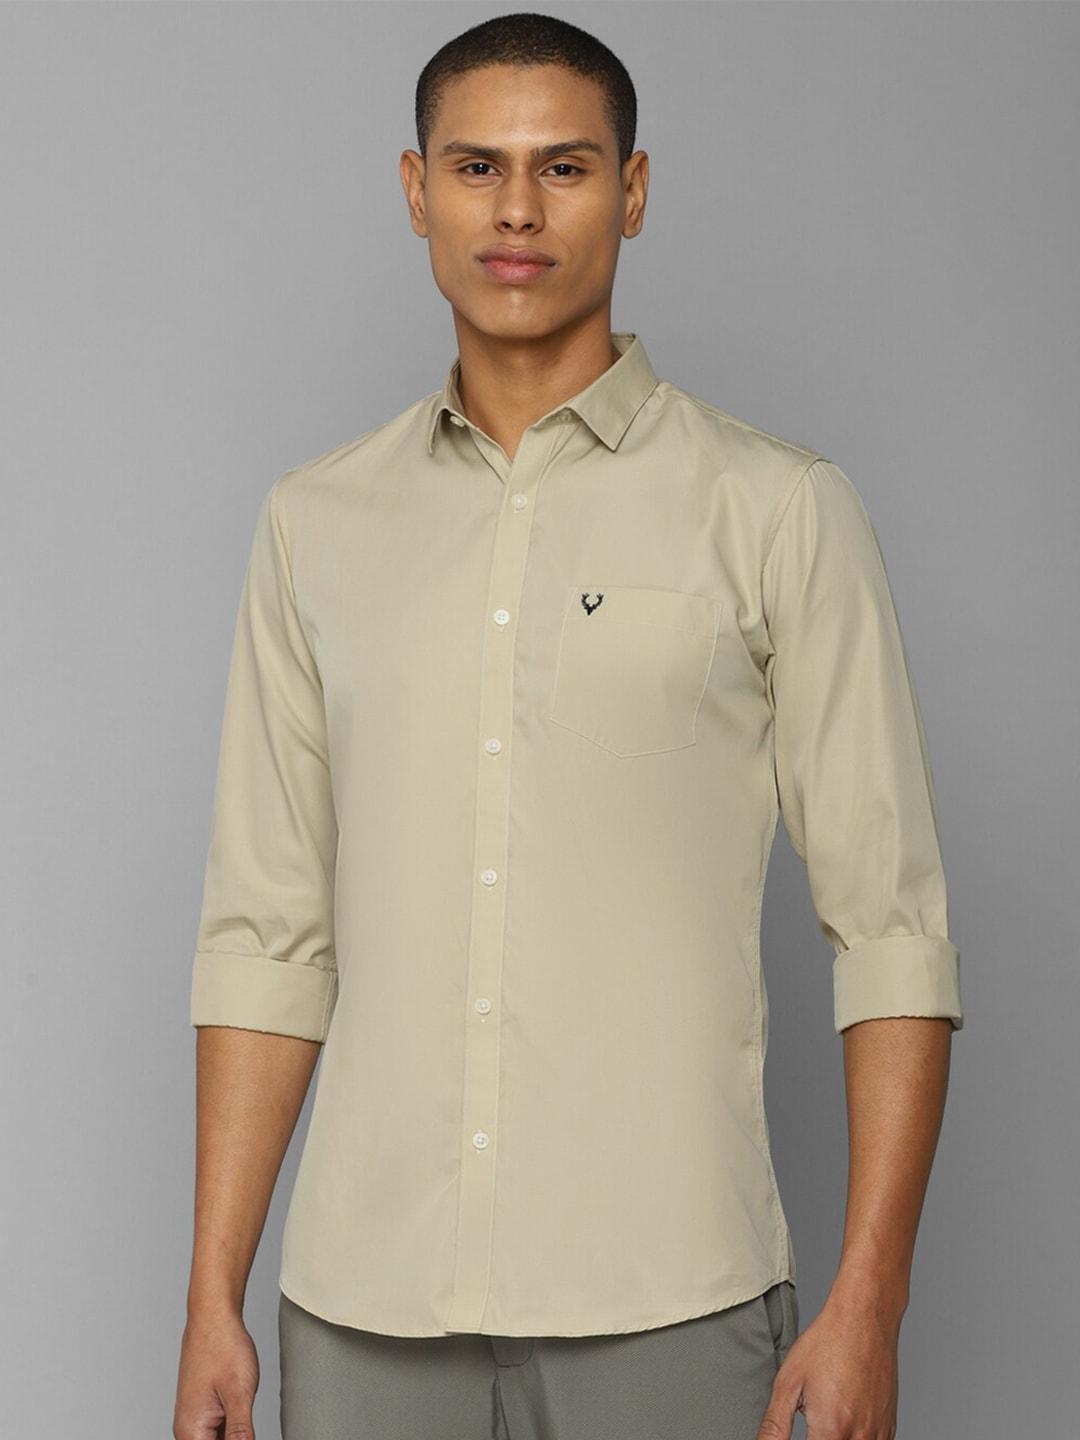 allen-solly-men-slim-fit-printed-cotton-casual-shirt